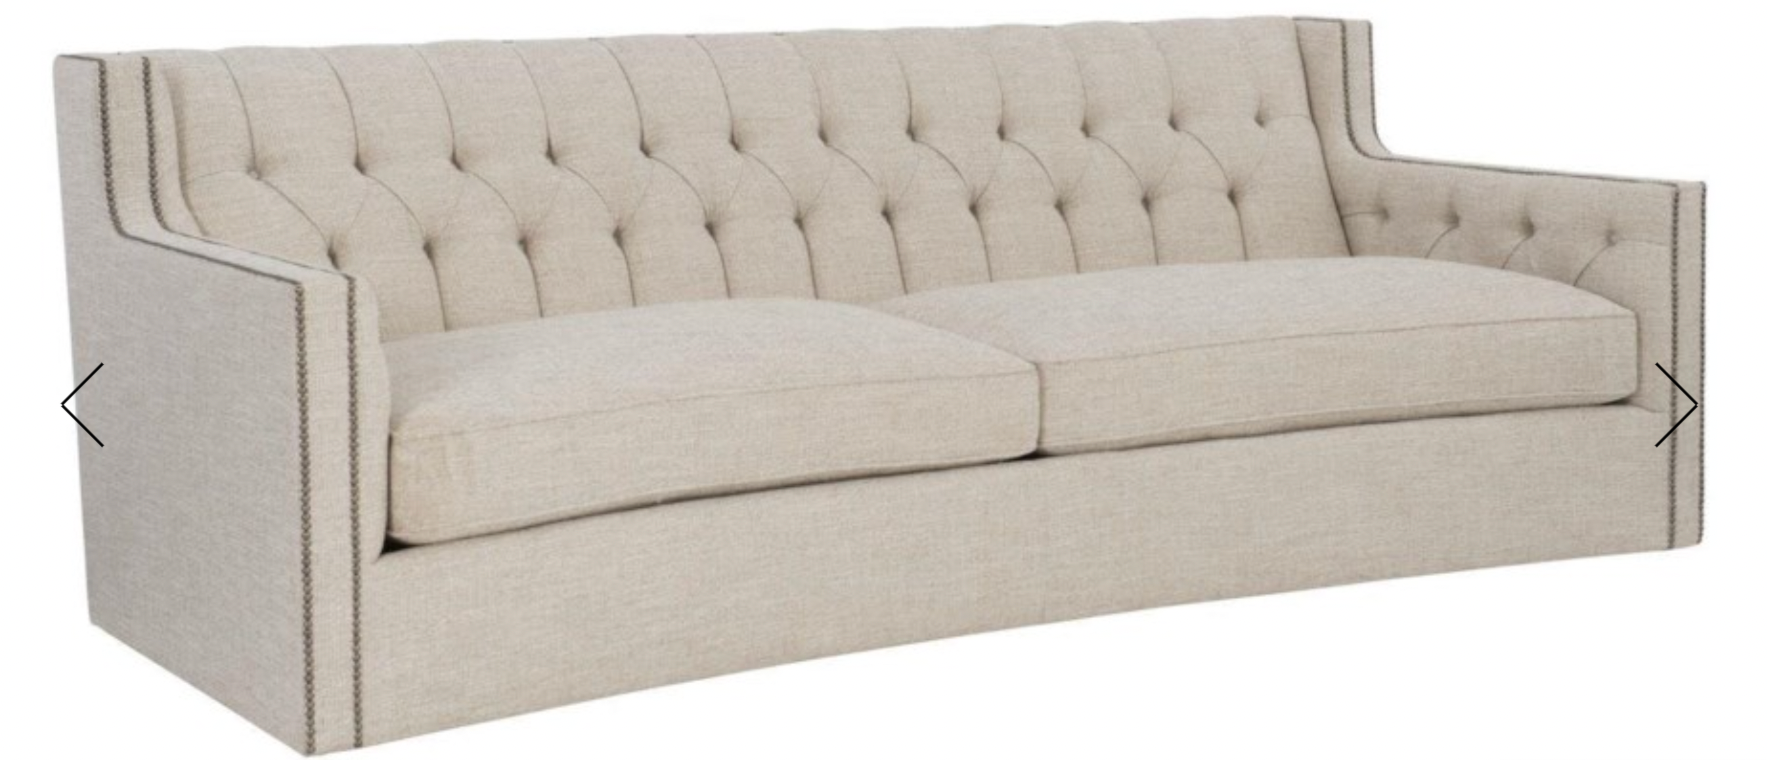 Bernhardt Curved Sofa